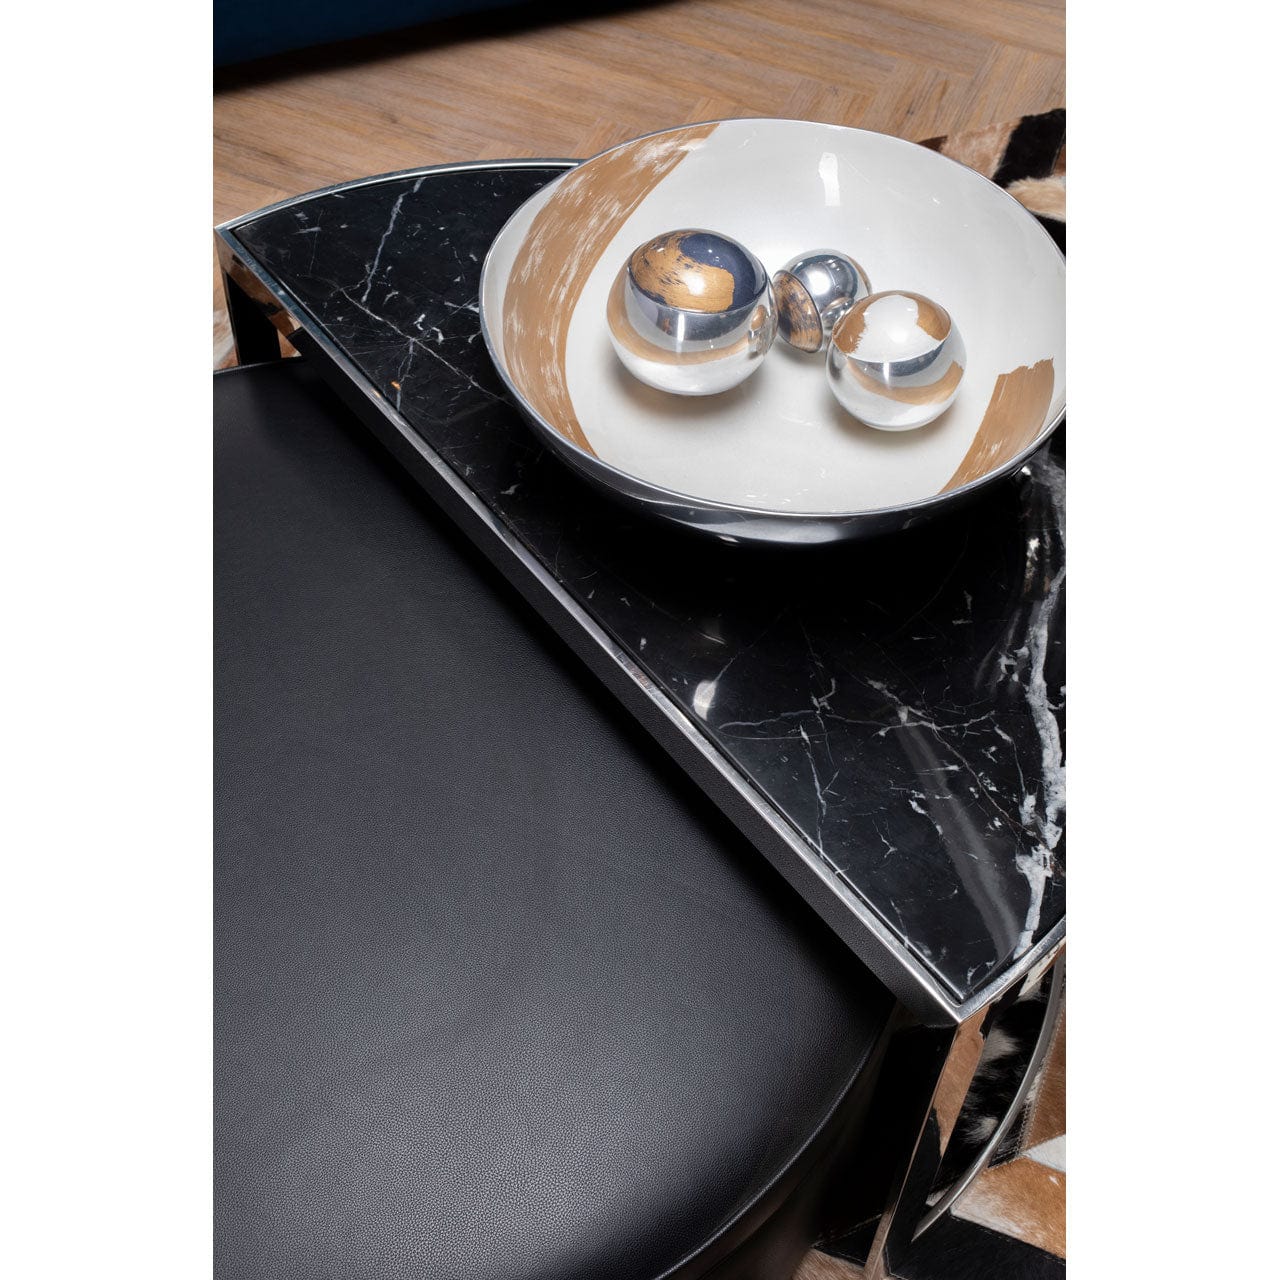 Hamilton Interiors Accessories Alma Deco Brushstroke Balls | OUTLET House of Isabella UK